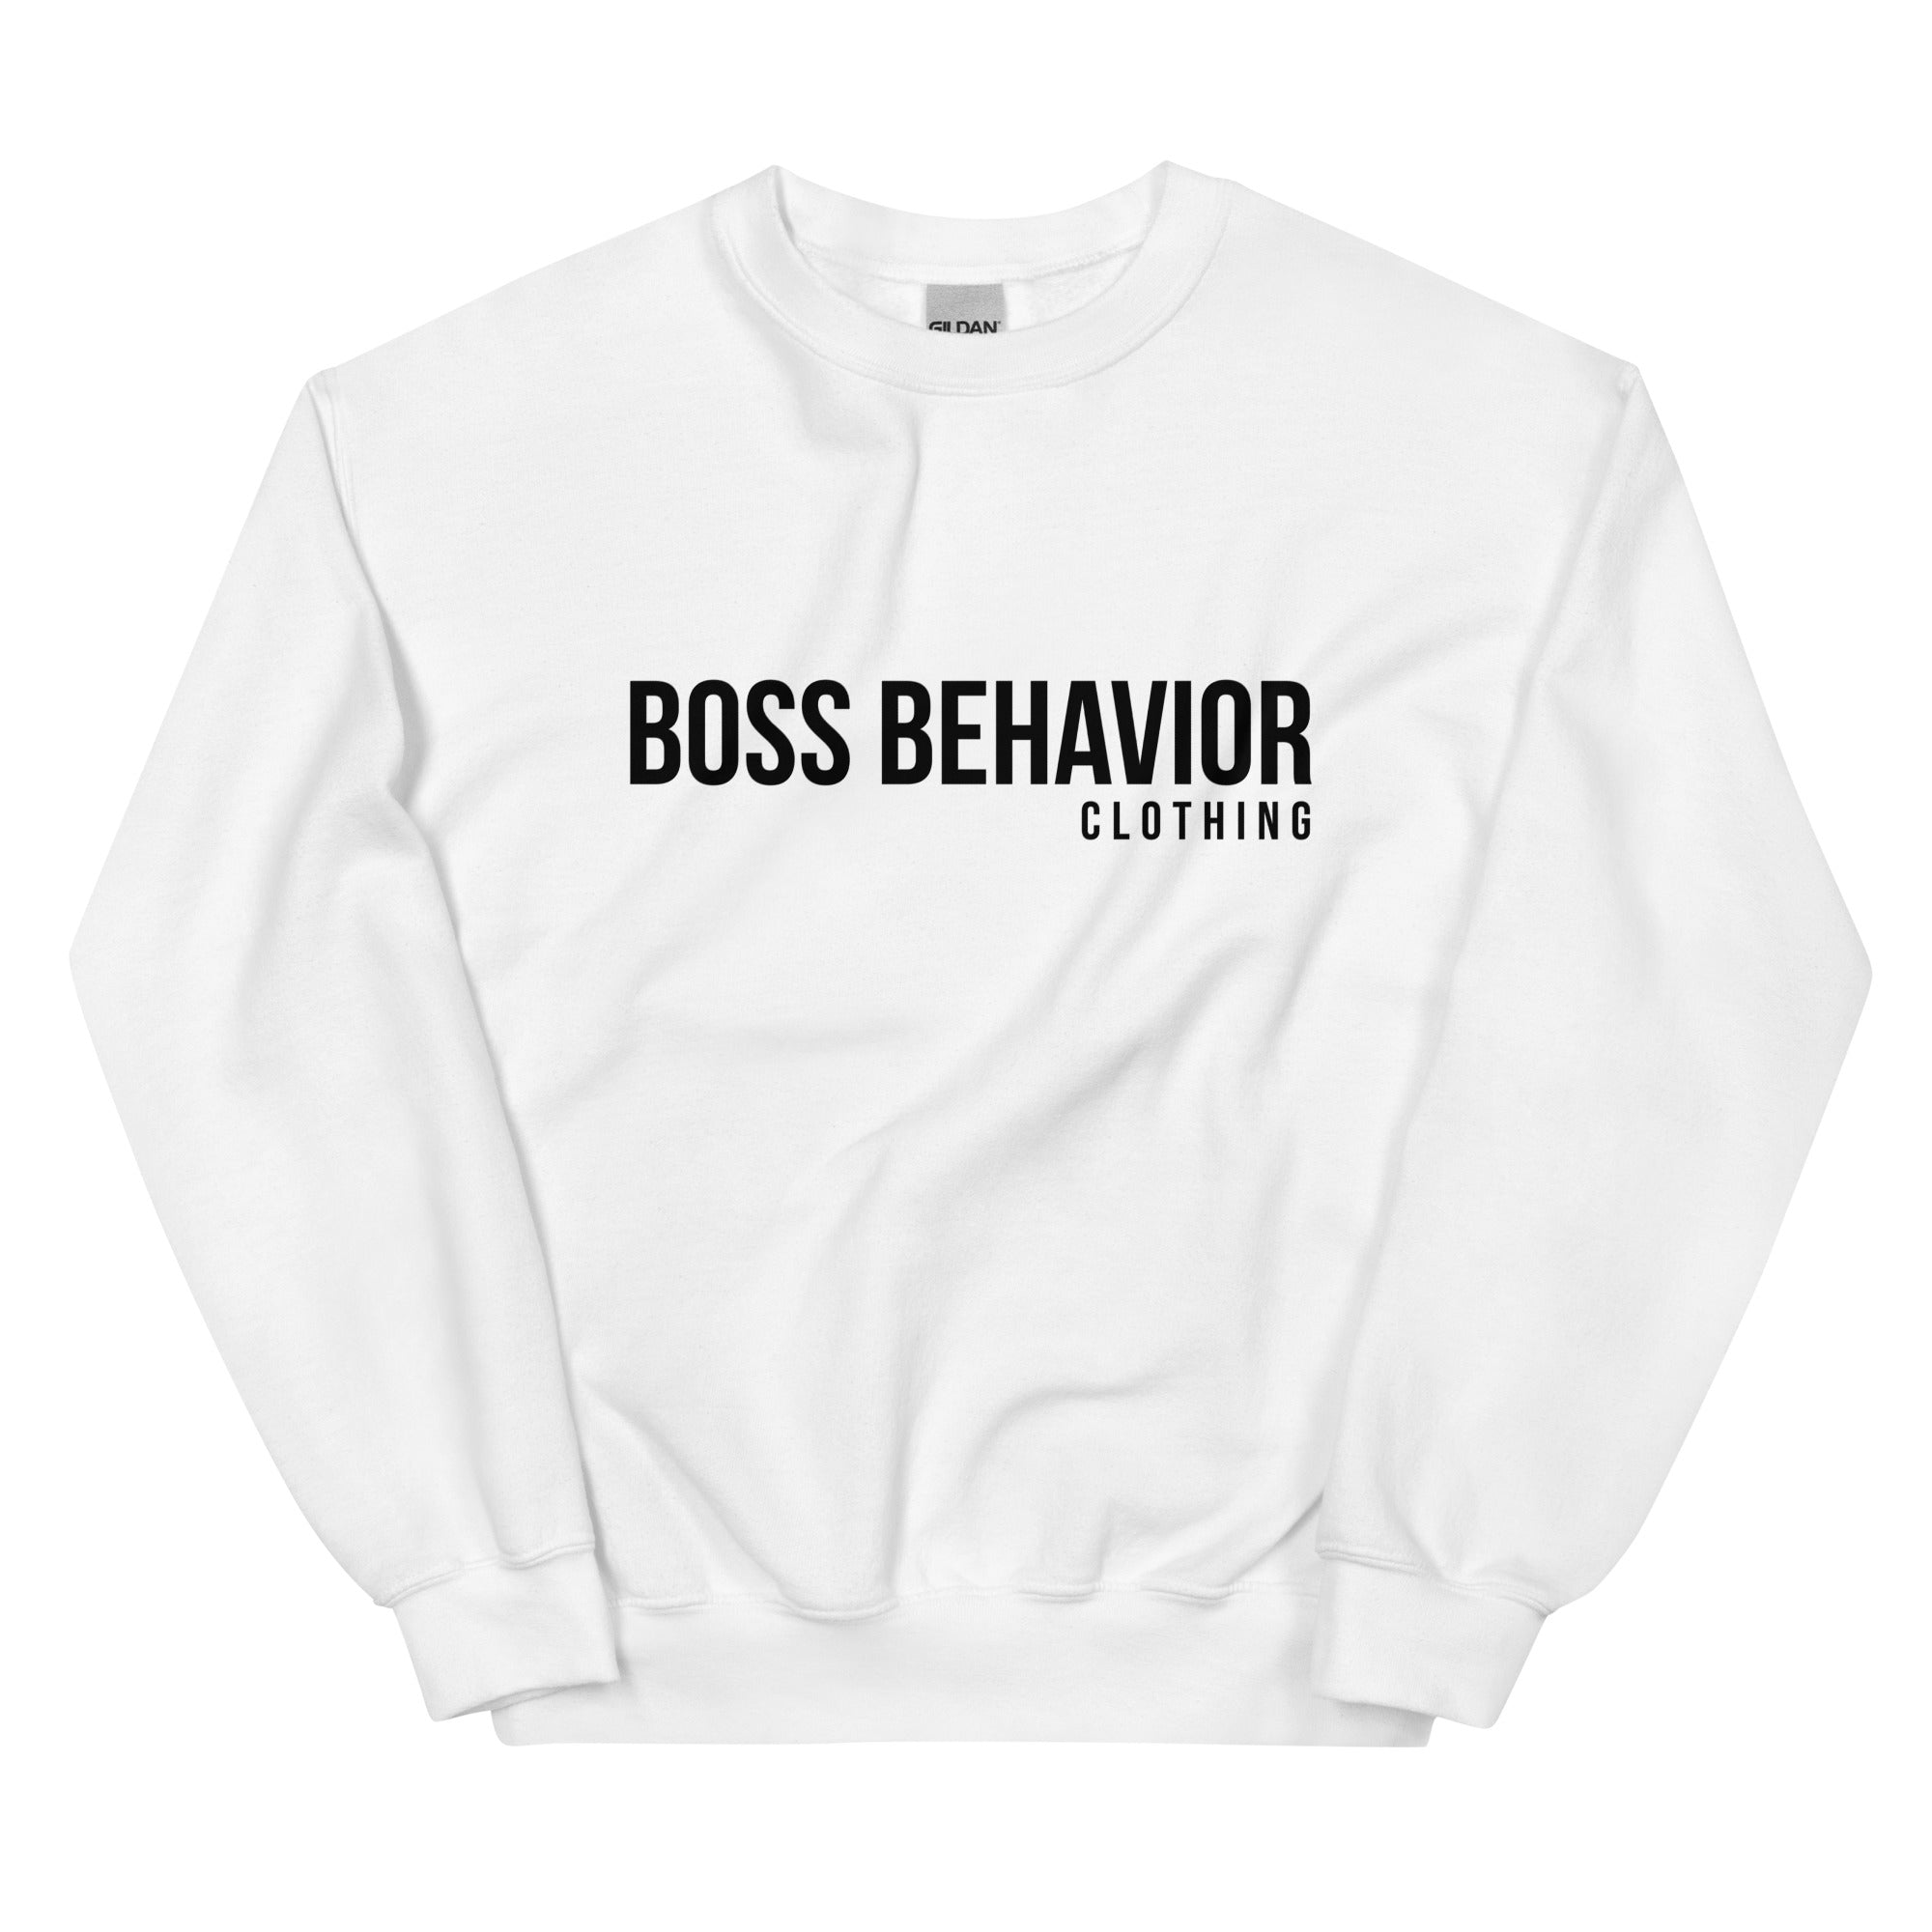 Cold World Boss Behavior Sweatshirt